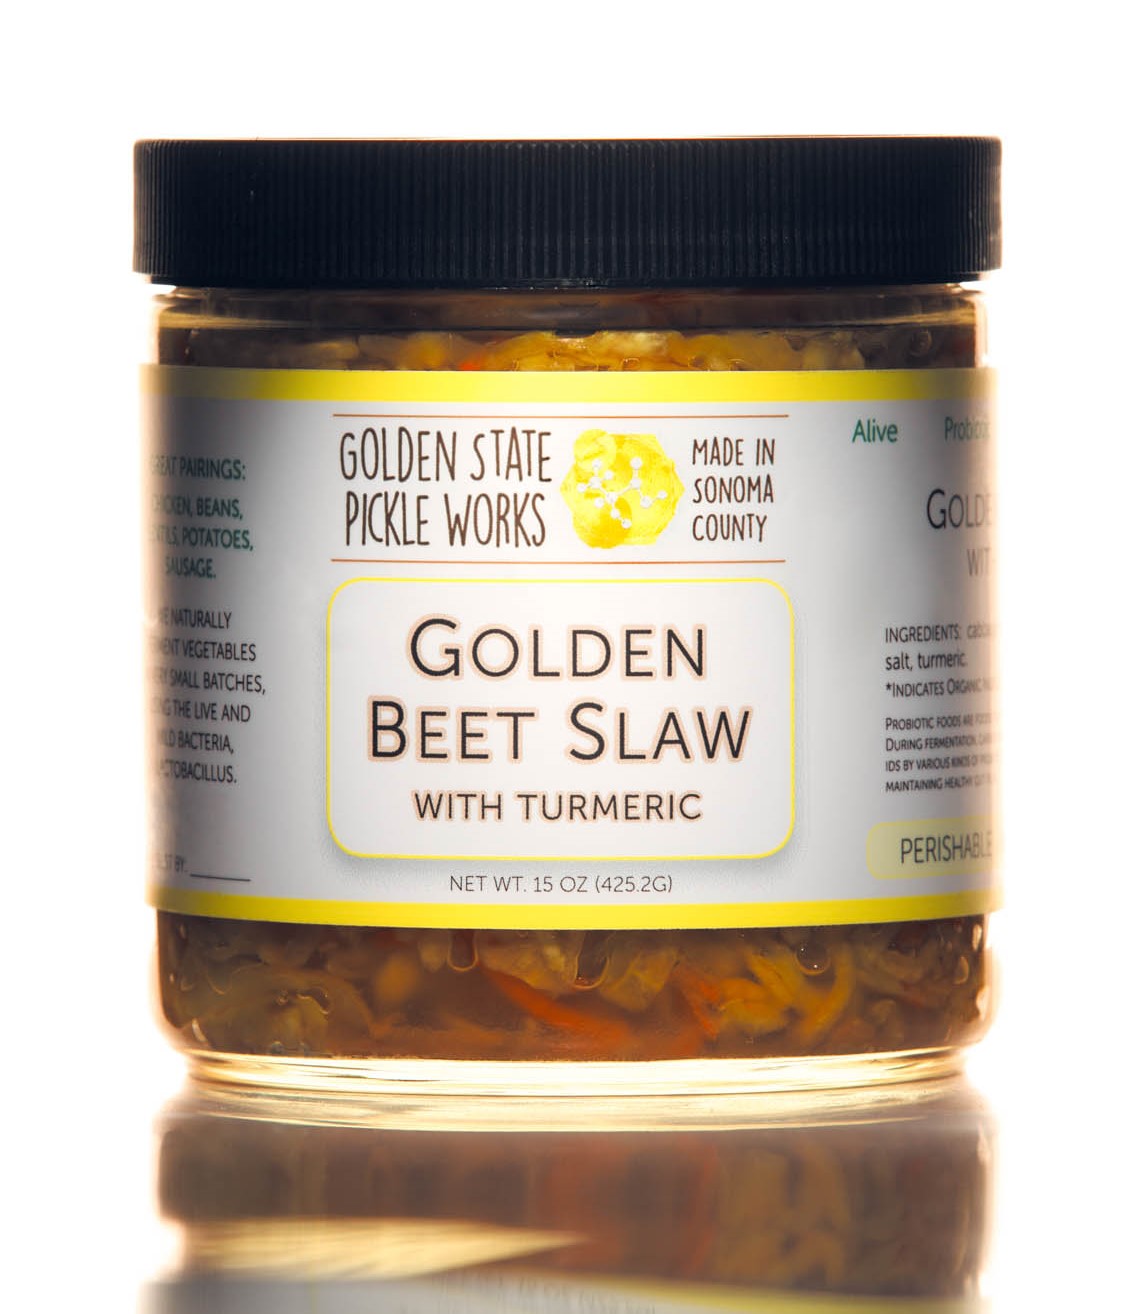 Golden Beet Slaw with Turmeric